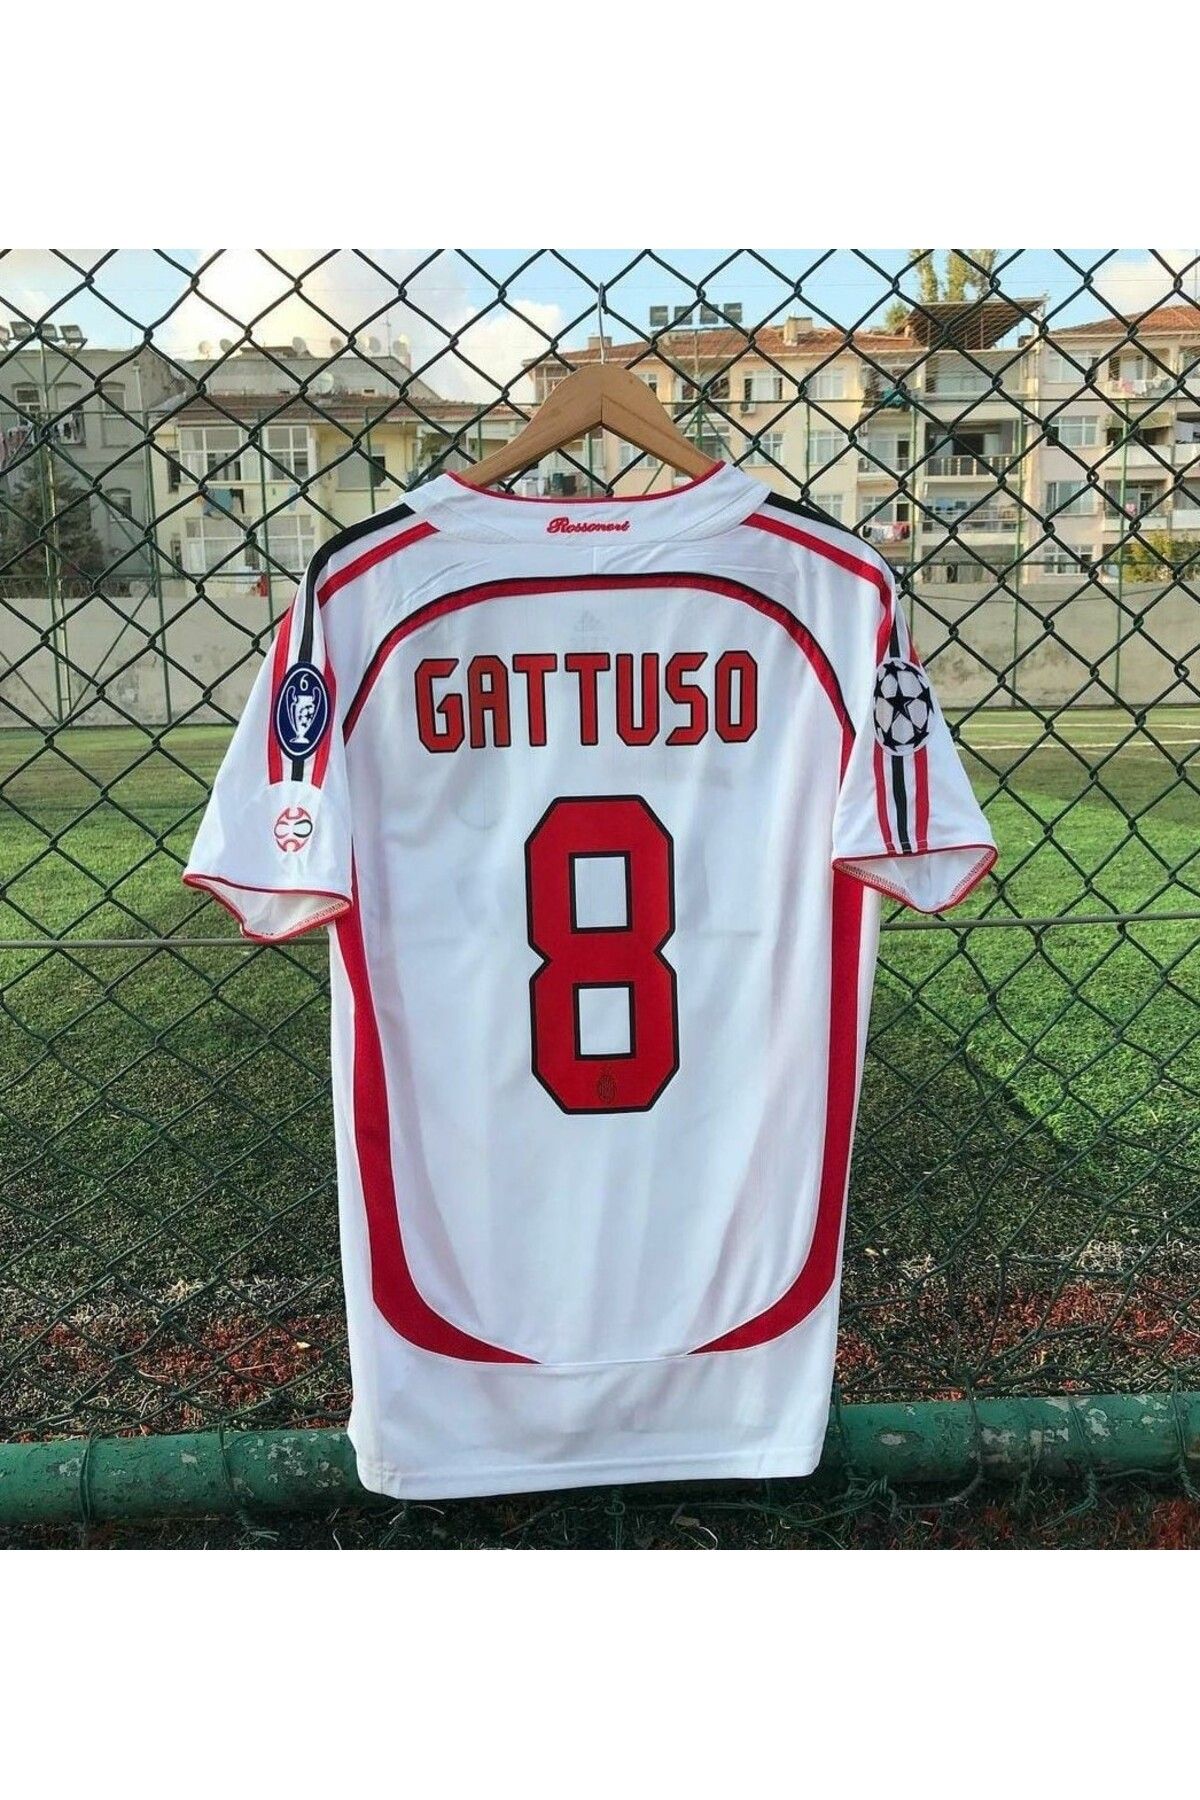 BYSPORTAKUS Milan 2007 Şampiyonlar Ligi Finali Gennaro Gattuso Nostalji Forması (EFSANE MİLAN KADROSU)